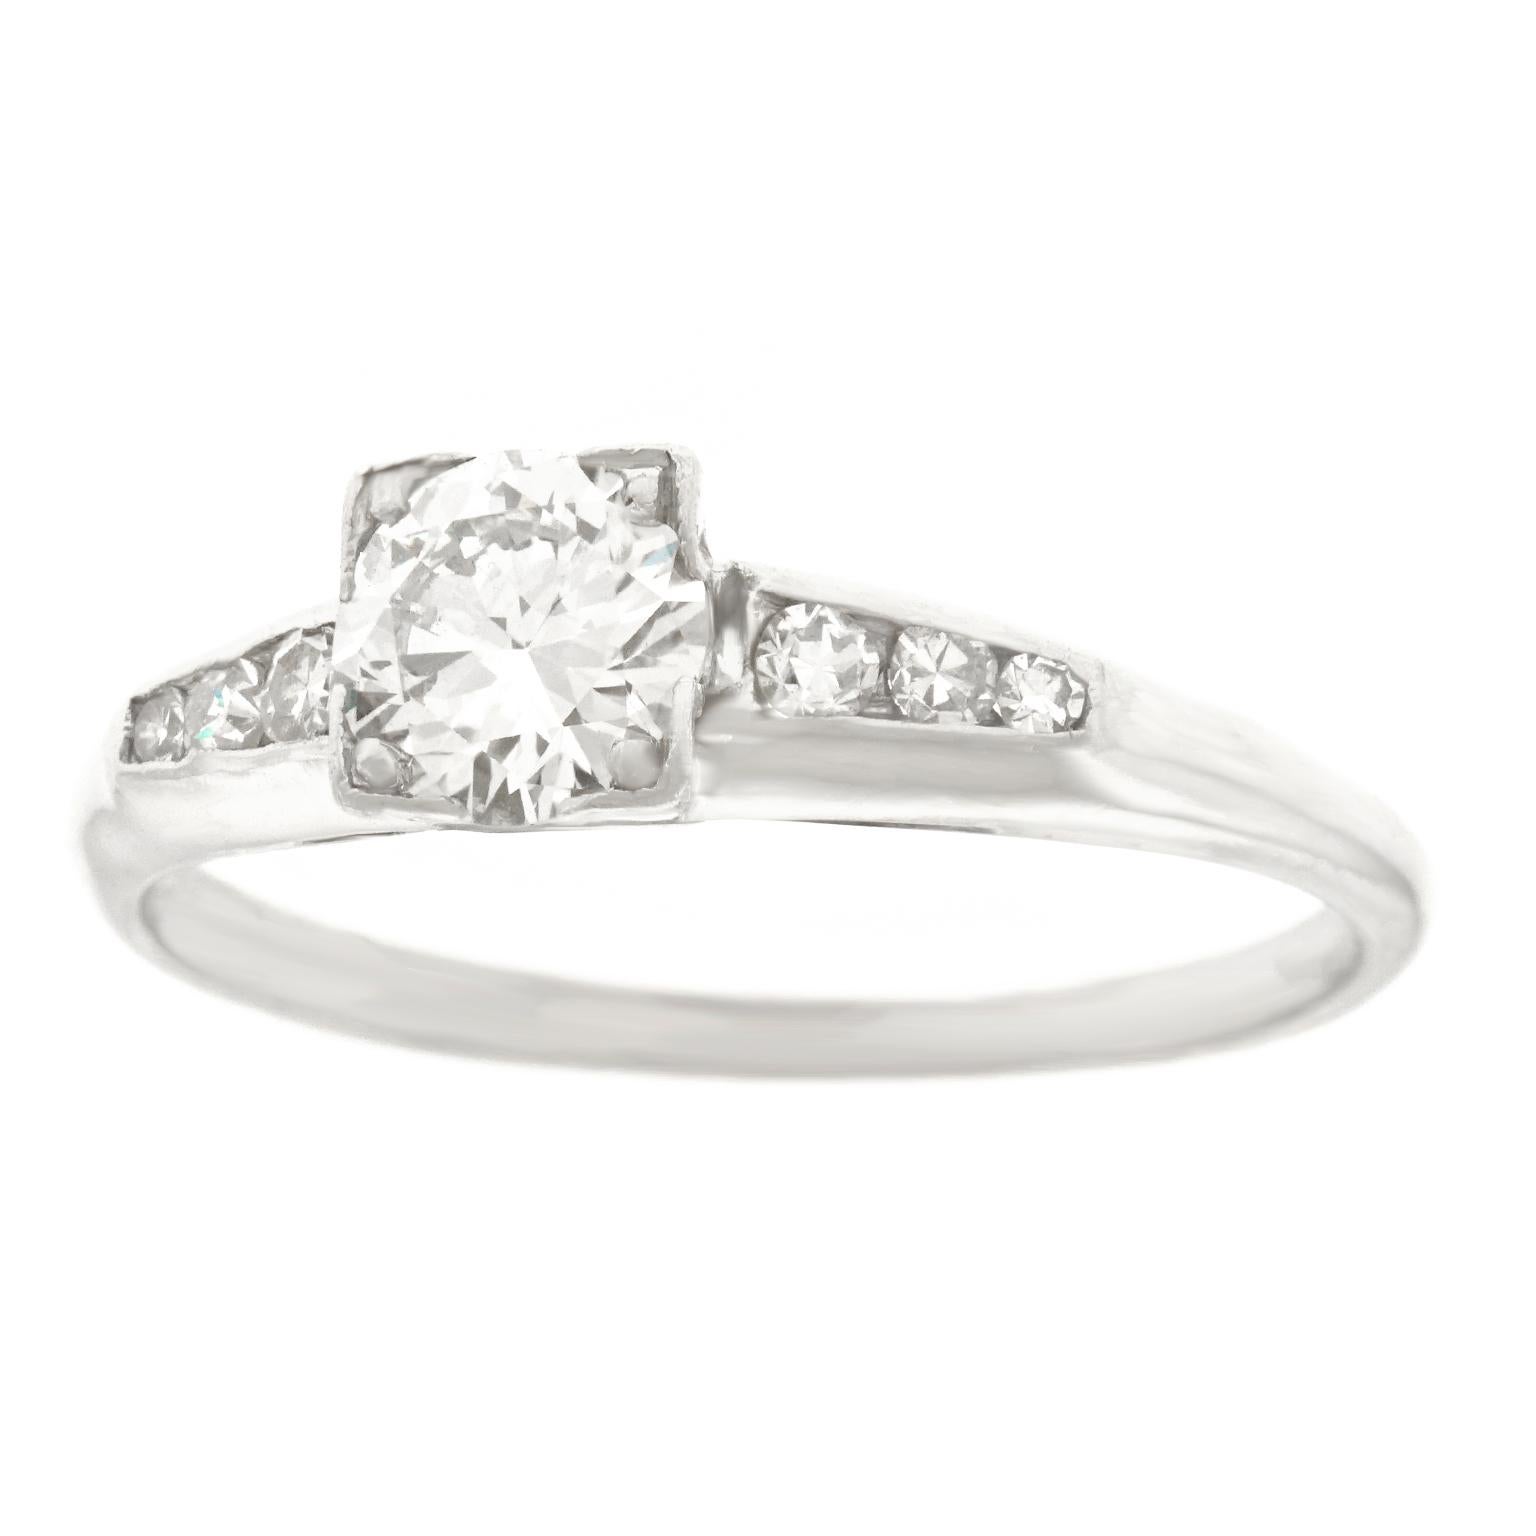 J.E. Caldwell Art Deco Diamond Engagement Ring